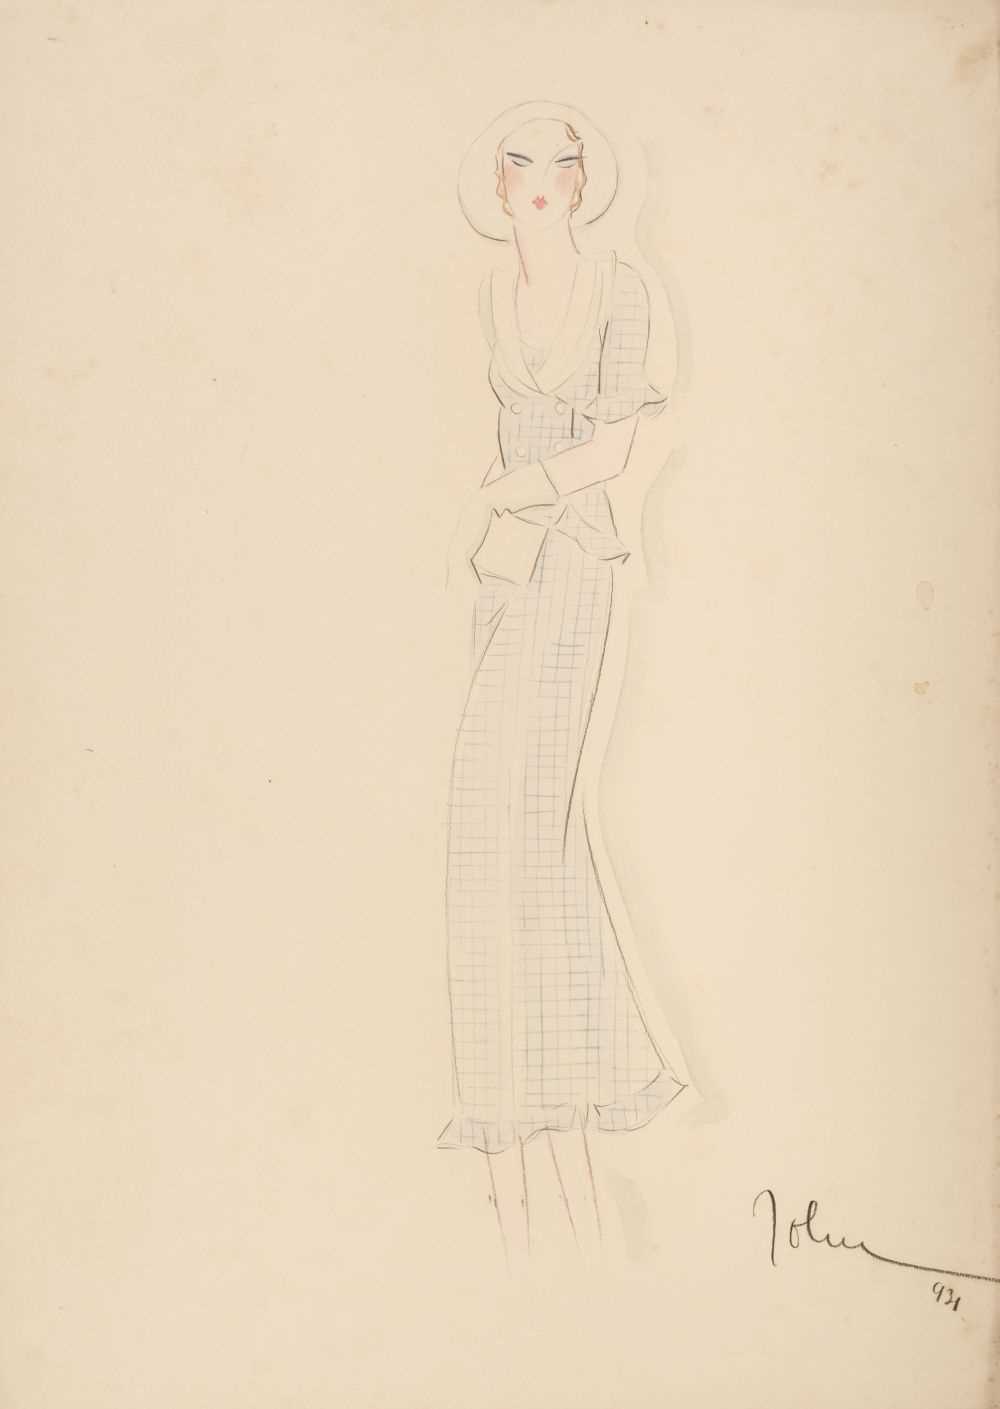 Lot 600 - Guida (John, 1896-1965). Fashion design for a blue and white day dress, circa 1930